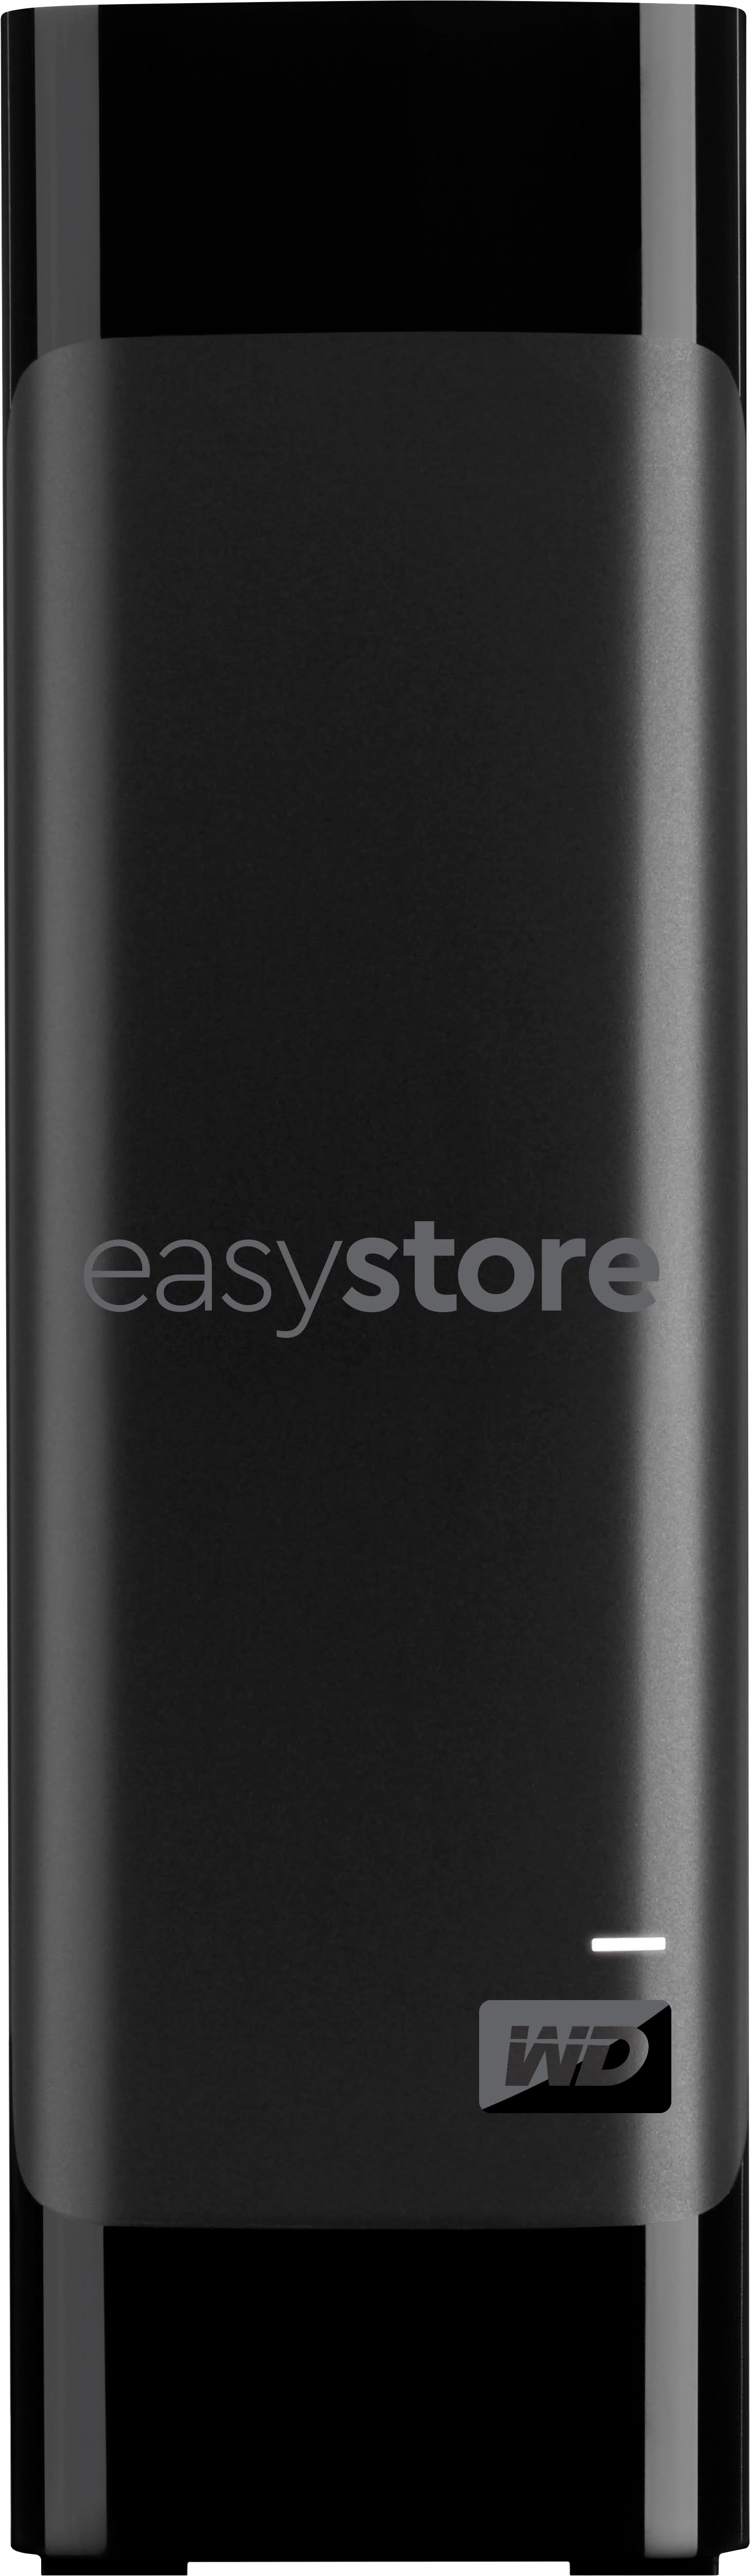 WD easystore 20TB External USB 3.0 Hard Drive Black WDBAMA0200HBK-NESN Best Buy